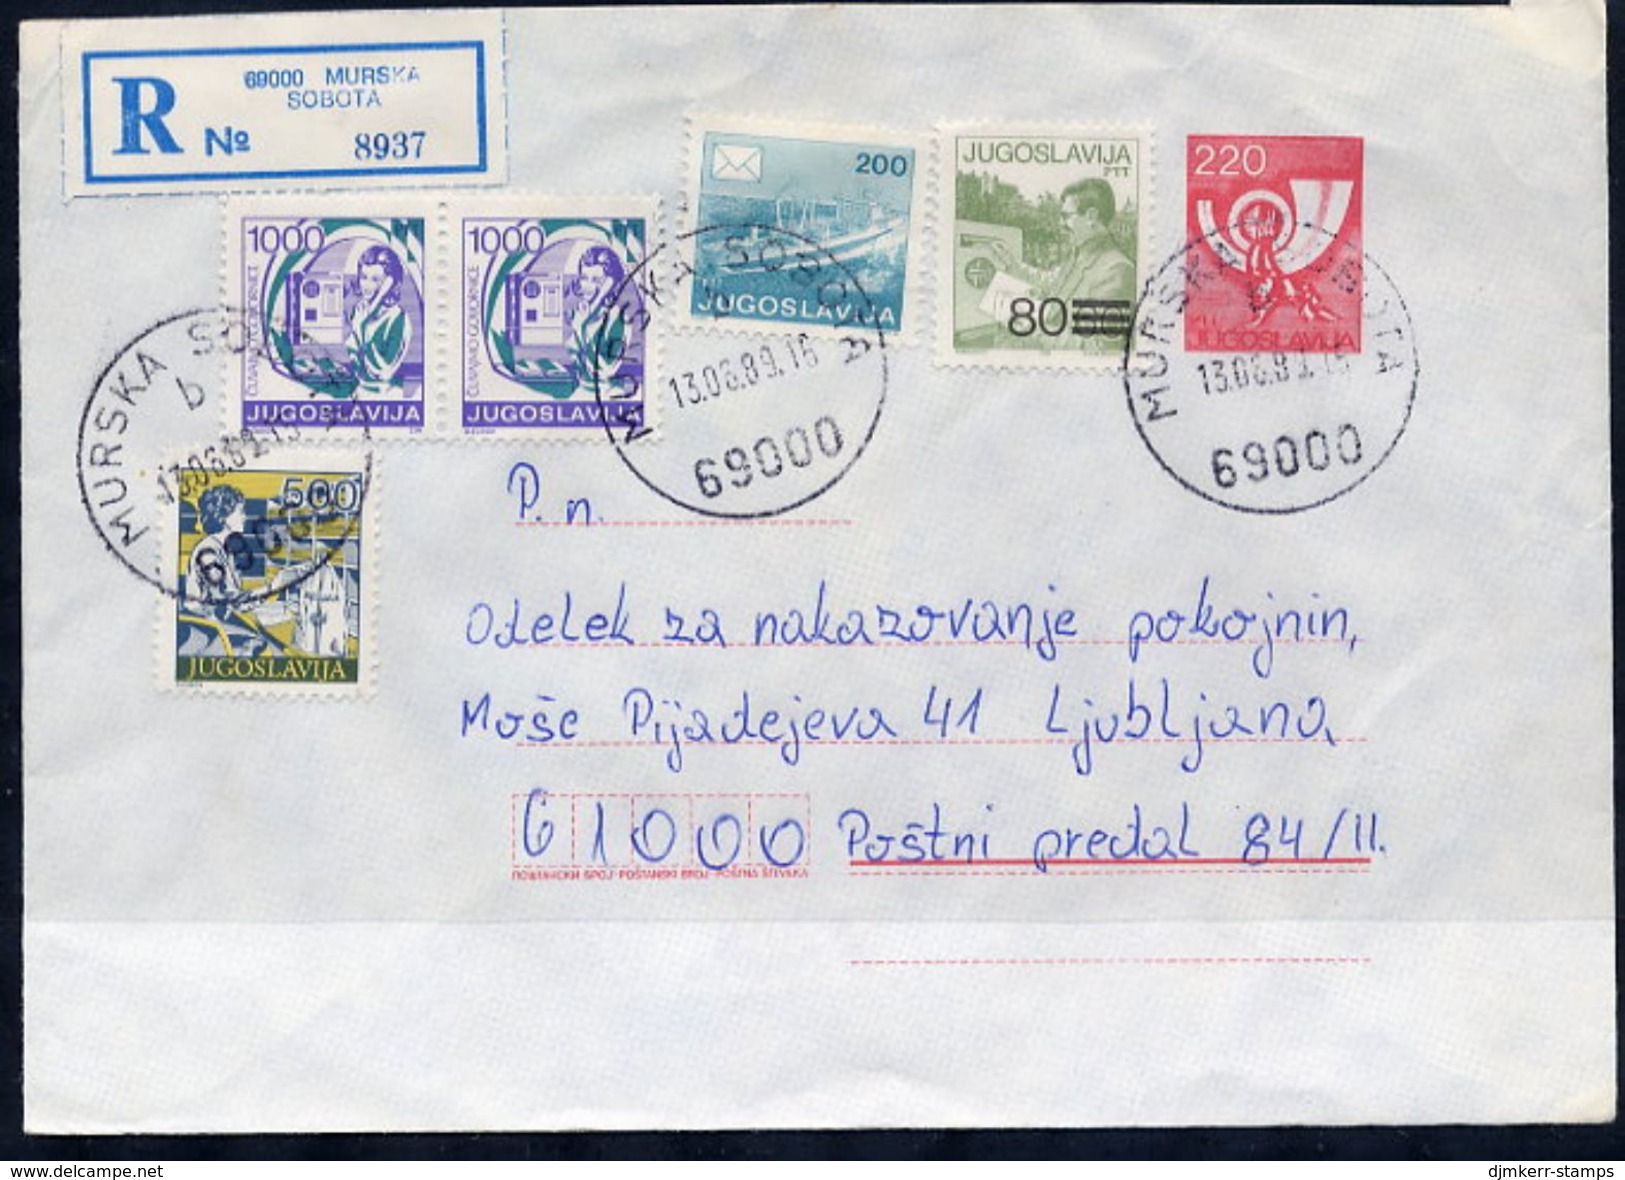 YUGOSLAVIA 1988 Posthorn 220 D. Registered Stationery Envelope Used With Additional Franking.  Michel U83 - Postal Stationery